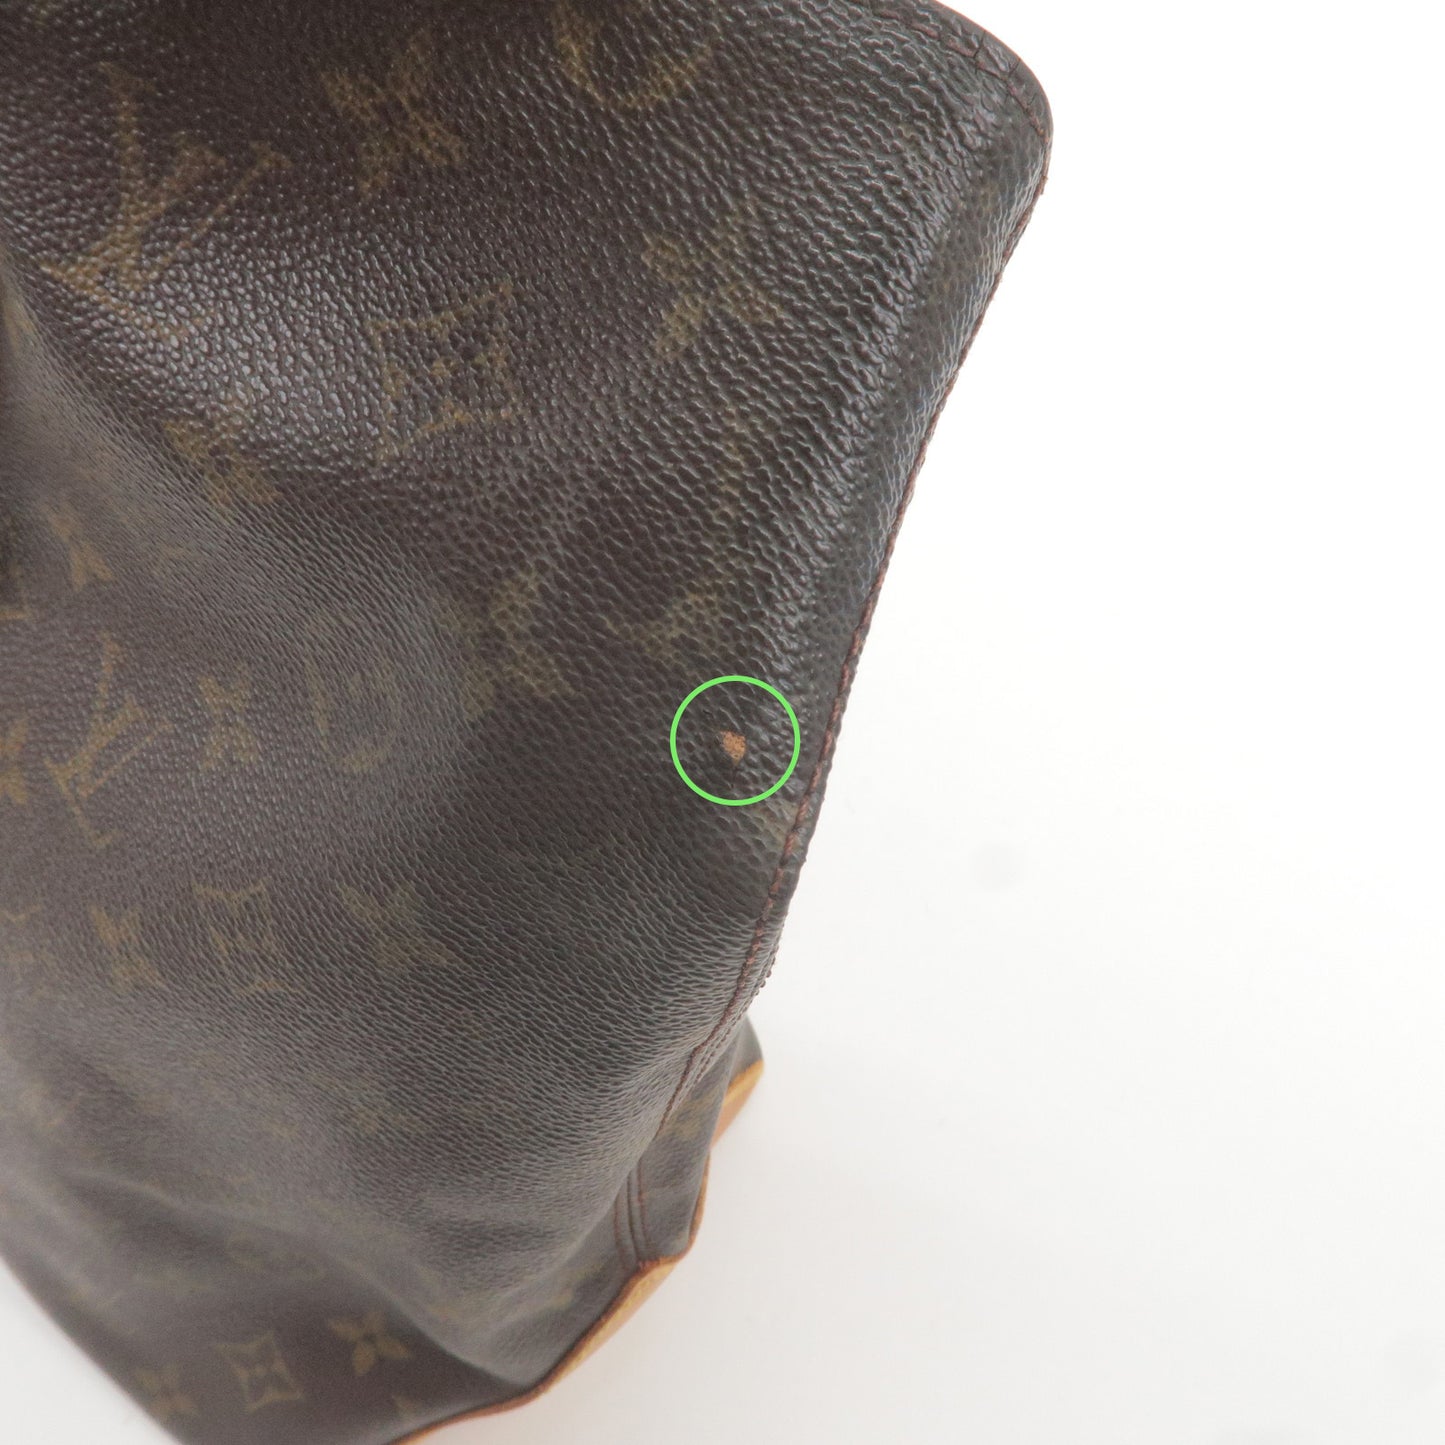 Louis Vuitton, Bags, Beautiful Louis Vuitton Monogram Cabas Mezzo Tote Bag